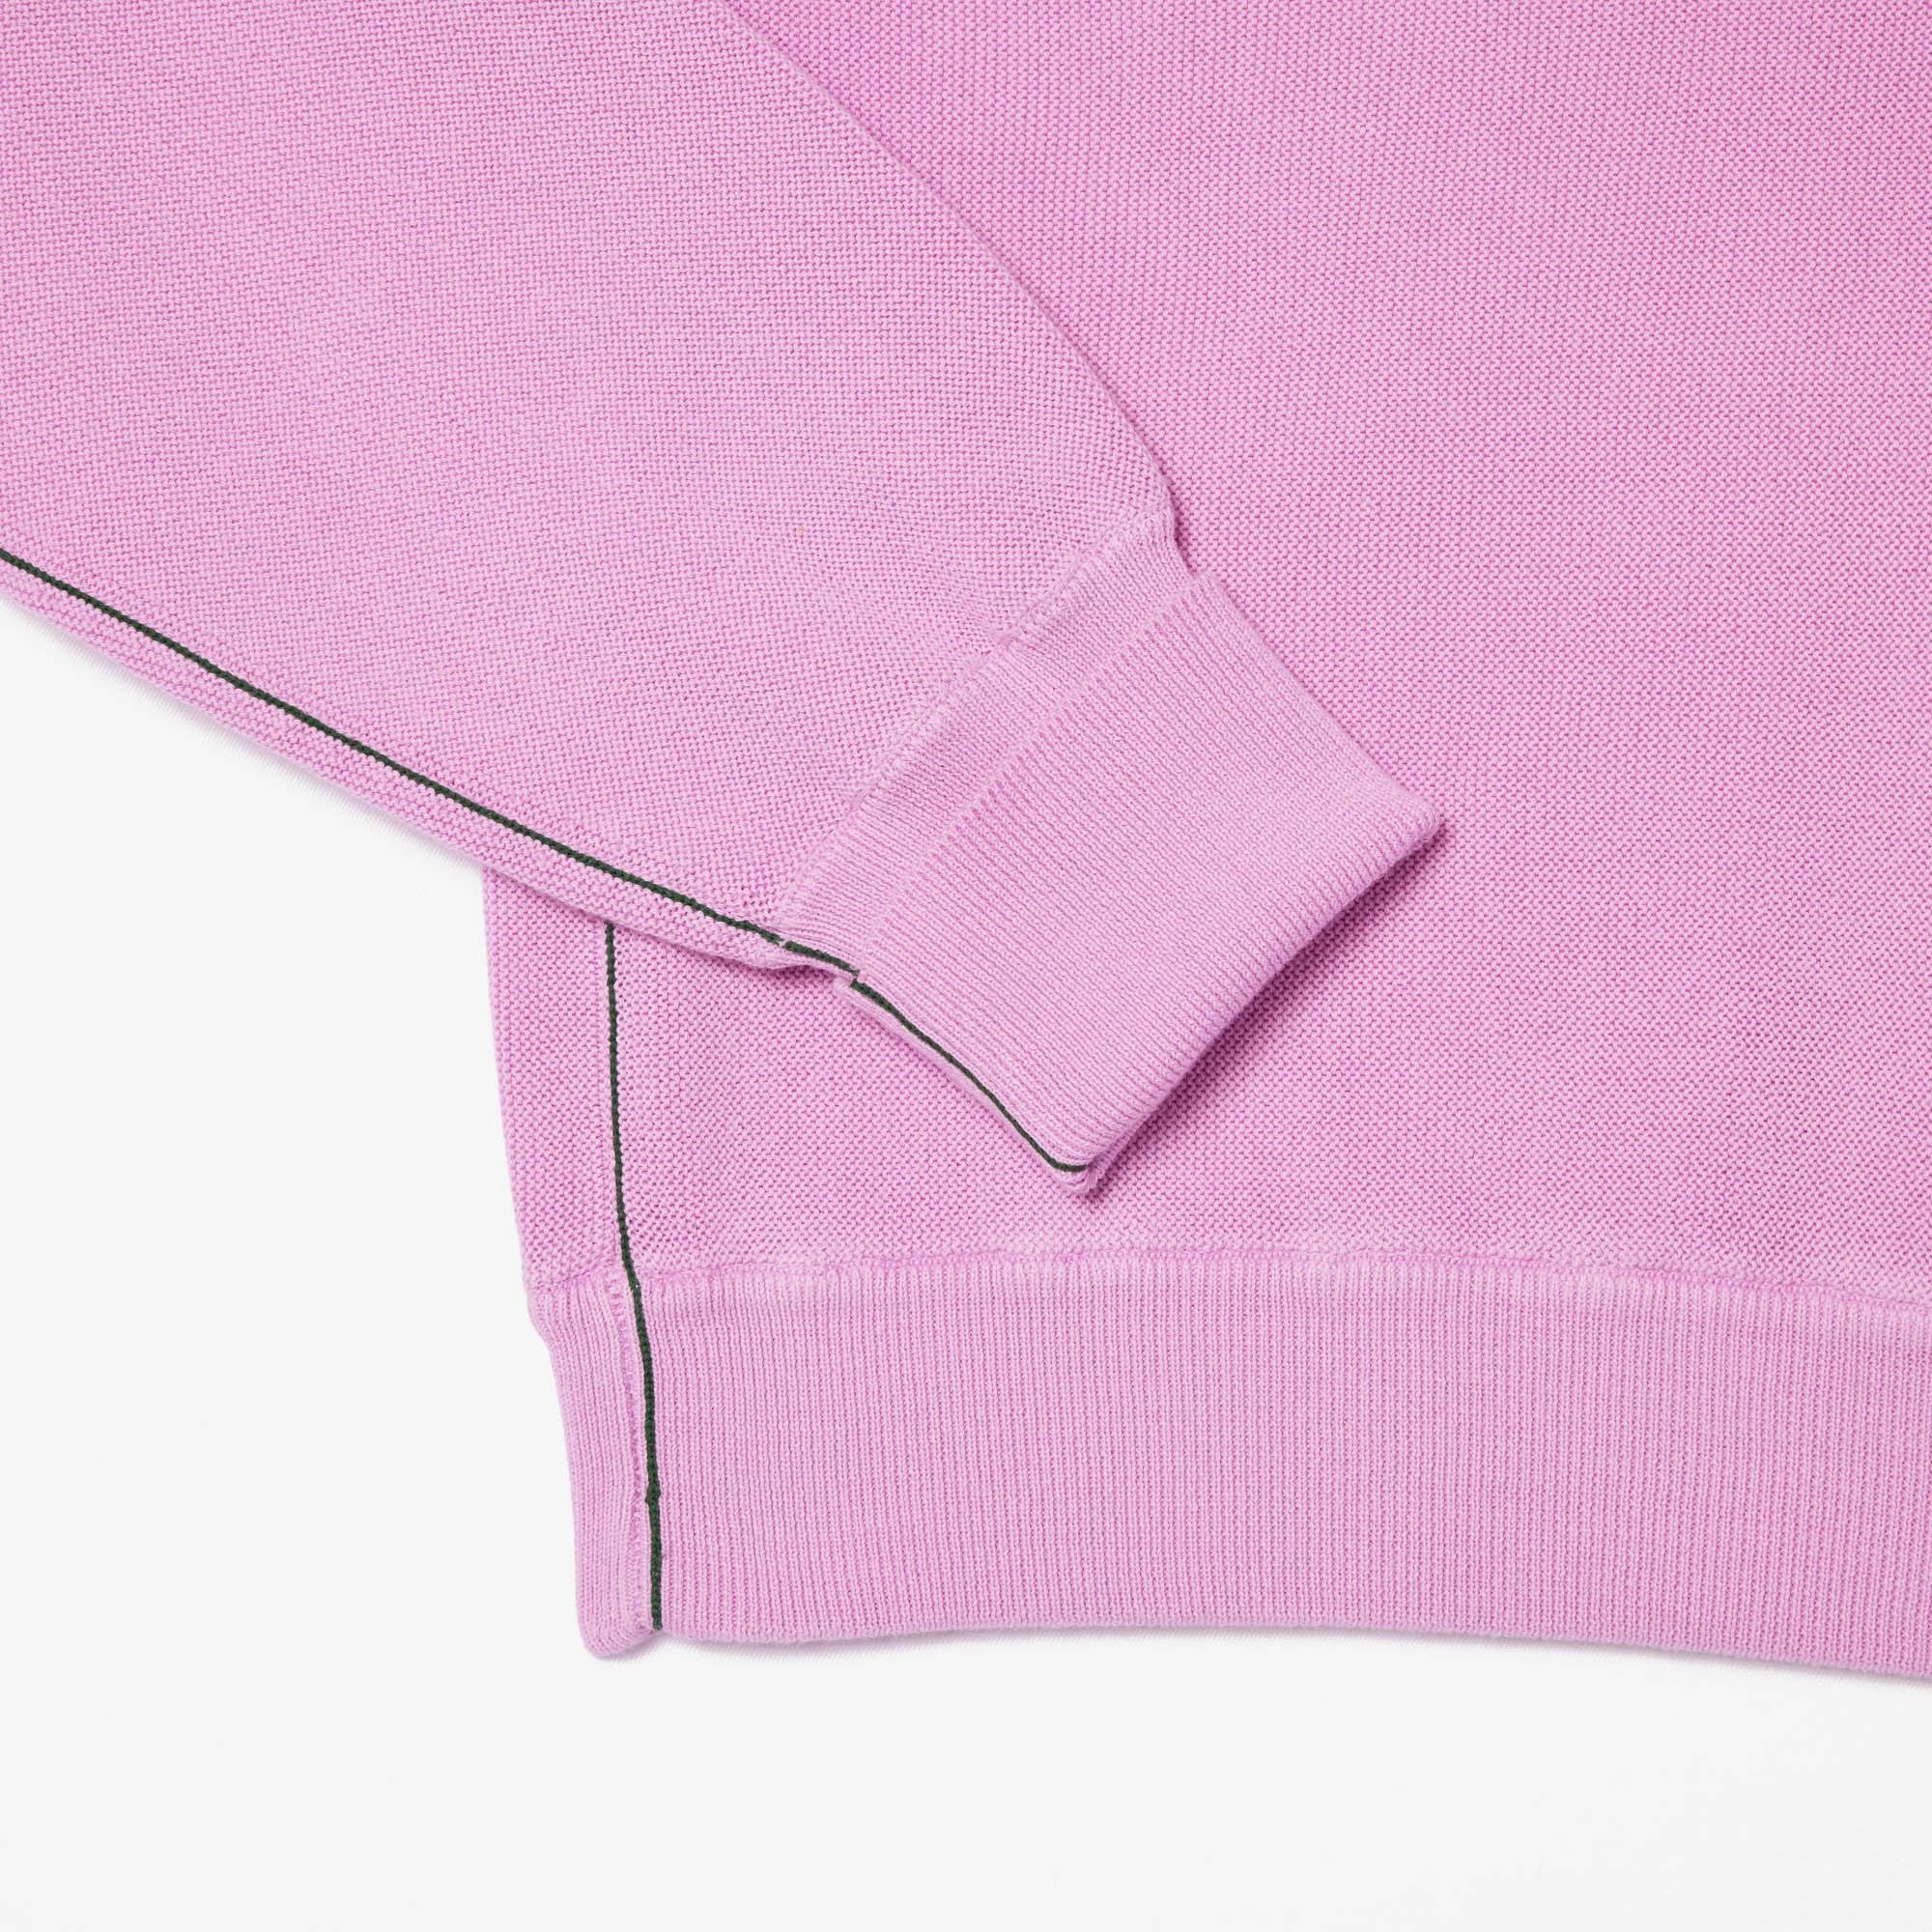 Lacoste dámský svetr z organické bavlny s kulatým výstřihem